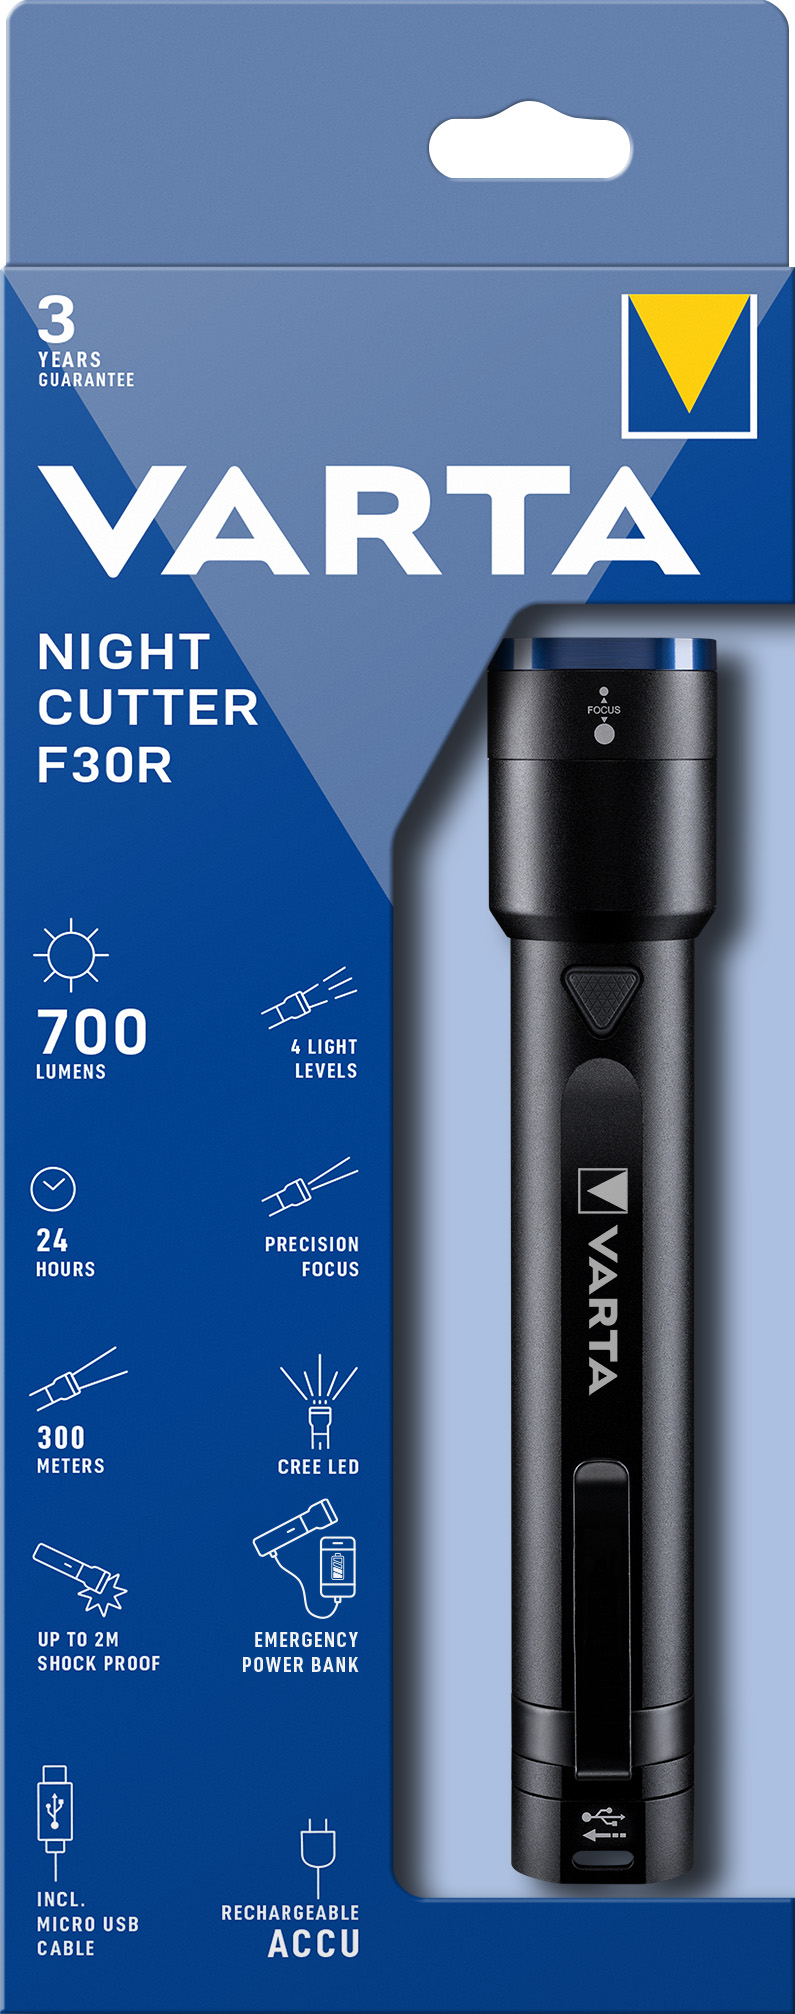 Varta LED Taschenlampe Night Cutter F30R 700lm, inkl. 1x Micro USB Kabel, Retail Blister